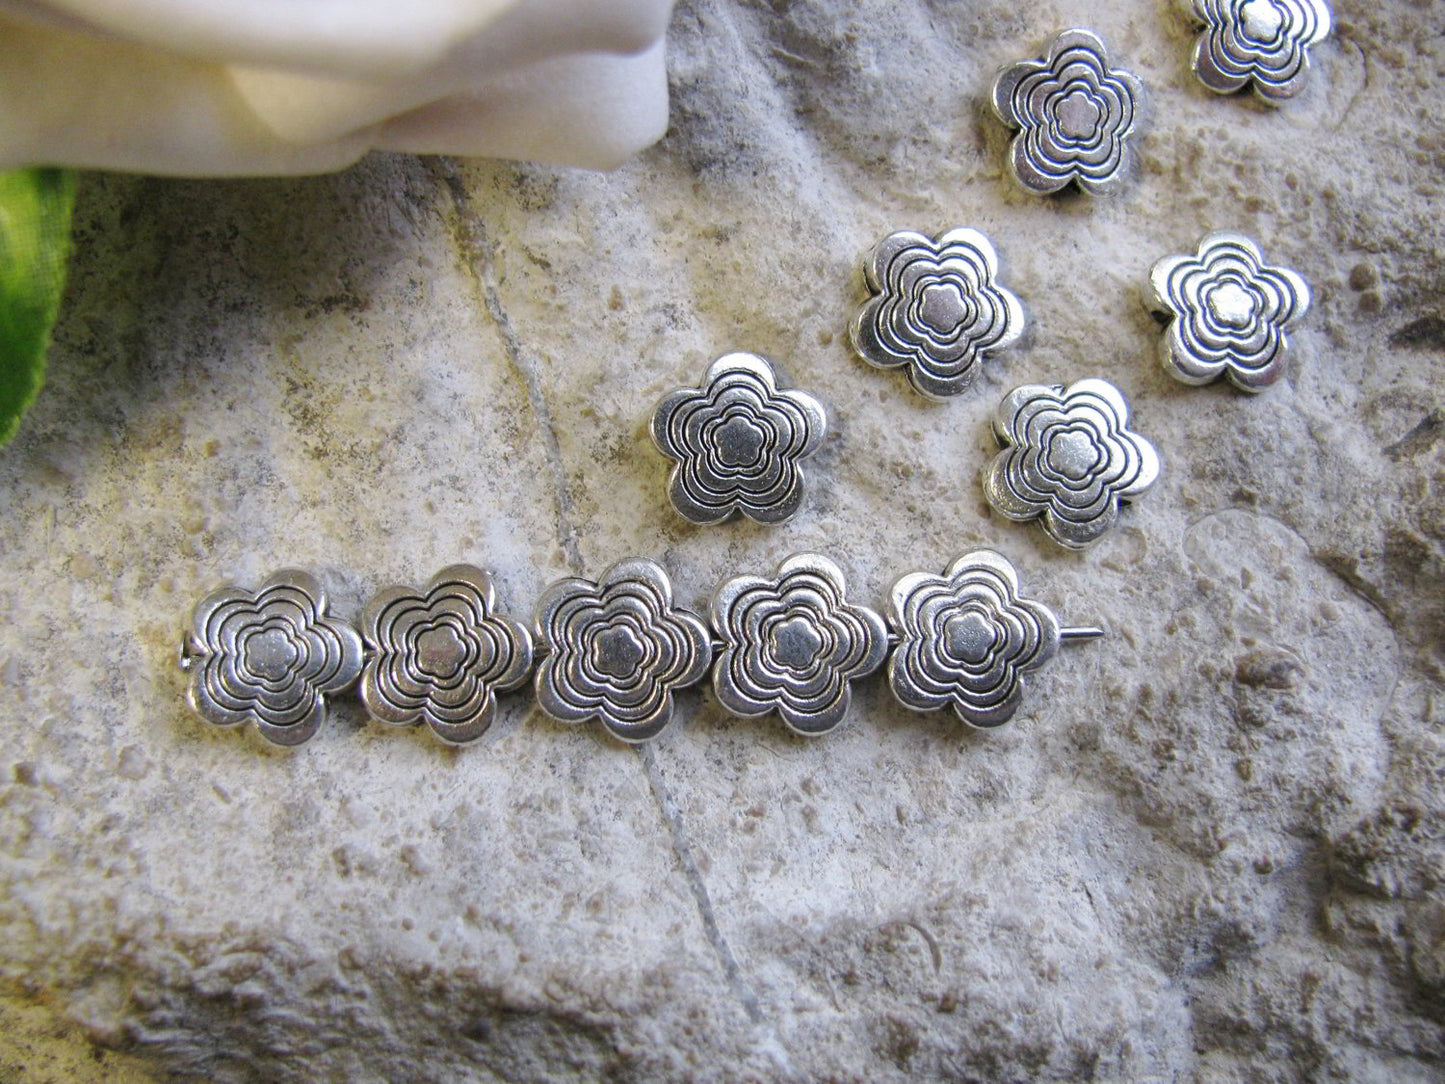 10 Metallperlen Blume silberfarben 9,5mm, Zwischenperlen, Perlen basteln